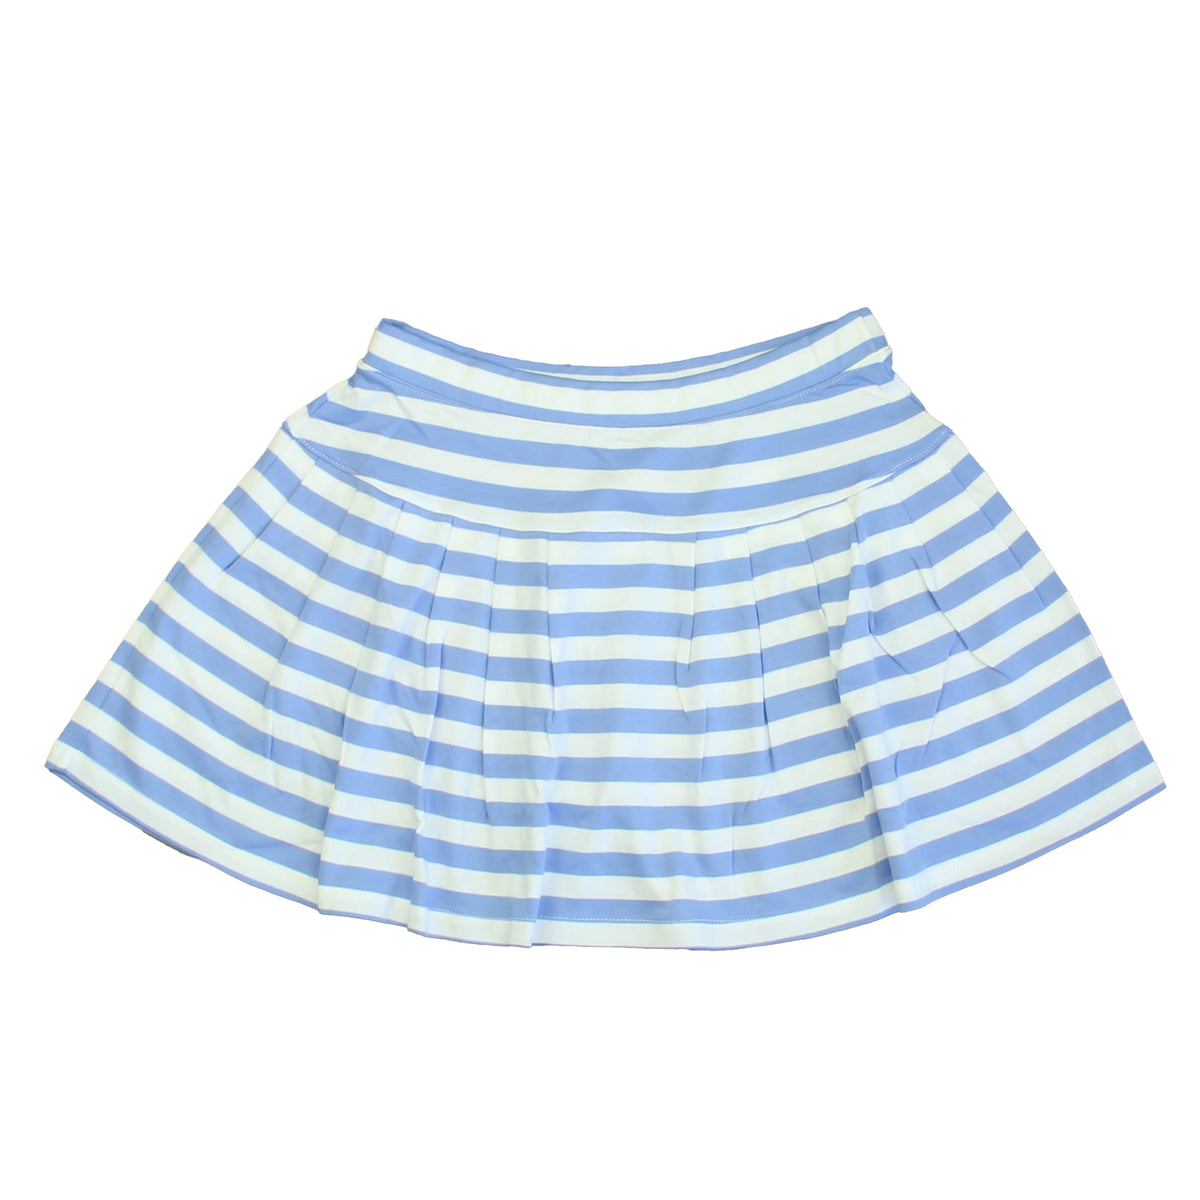 New with Tags: Cornflower Blue Stripe Skirt -- FINAL SALE